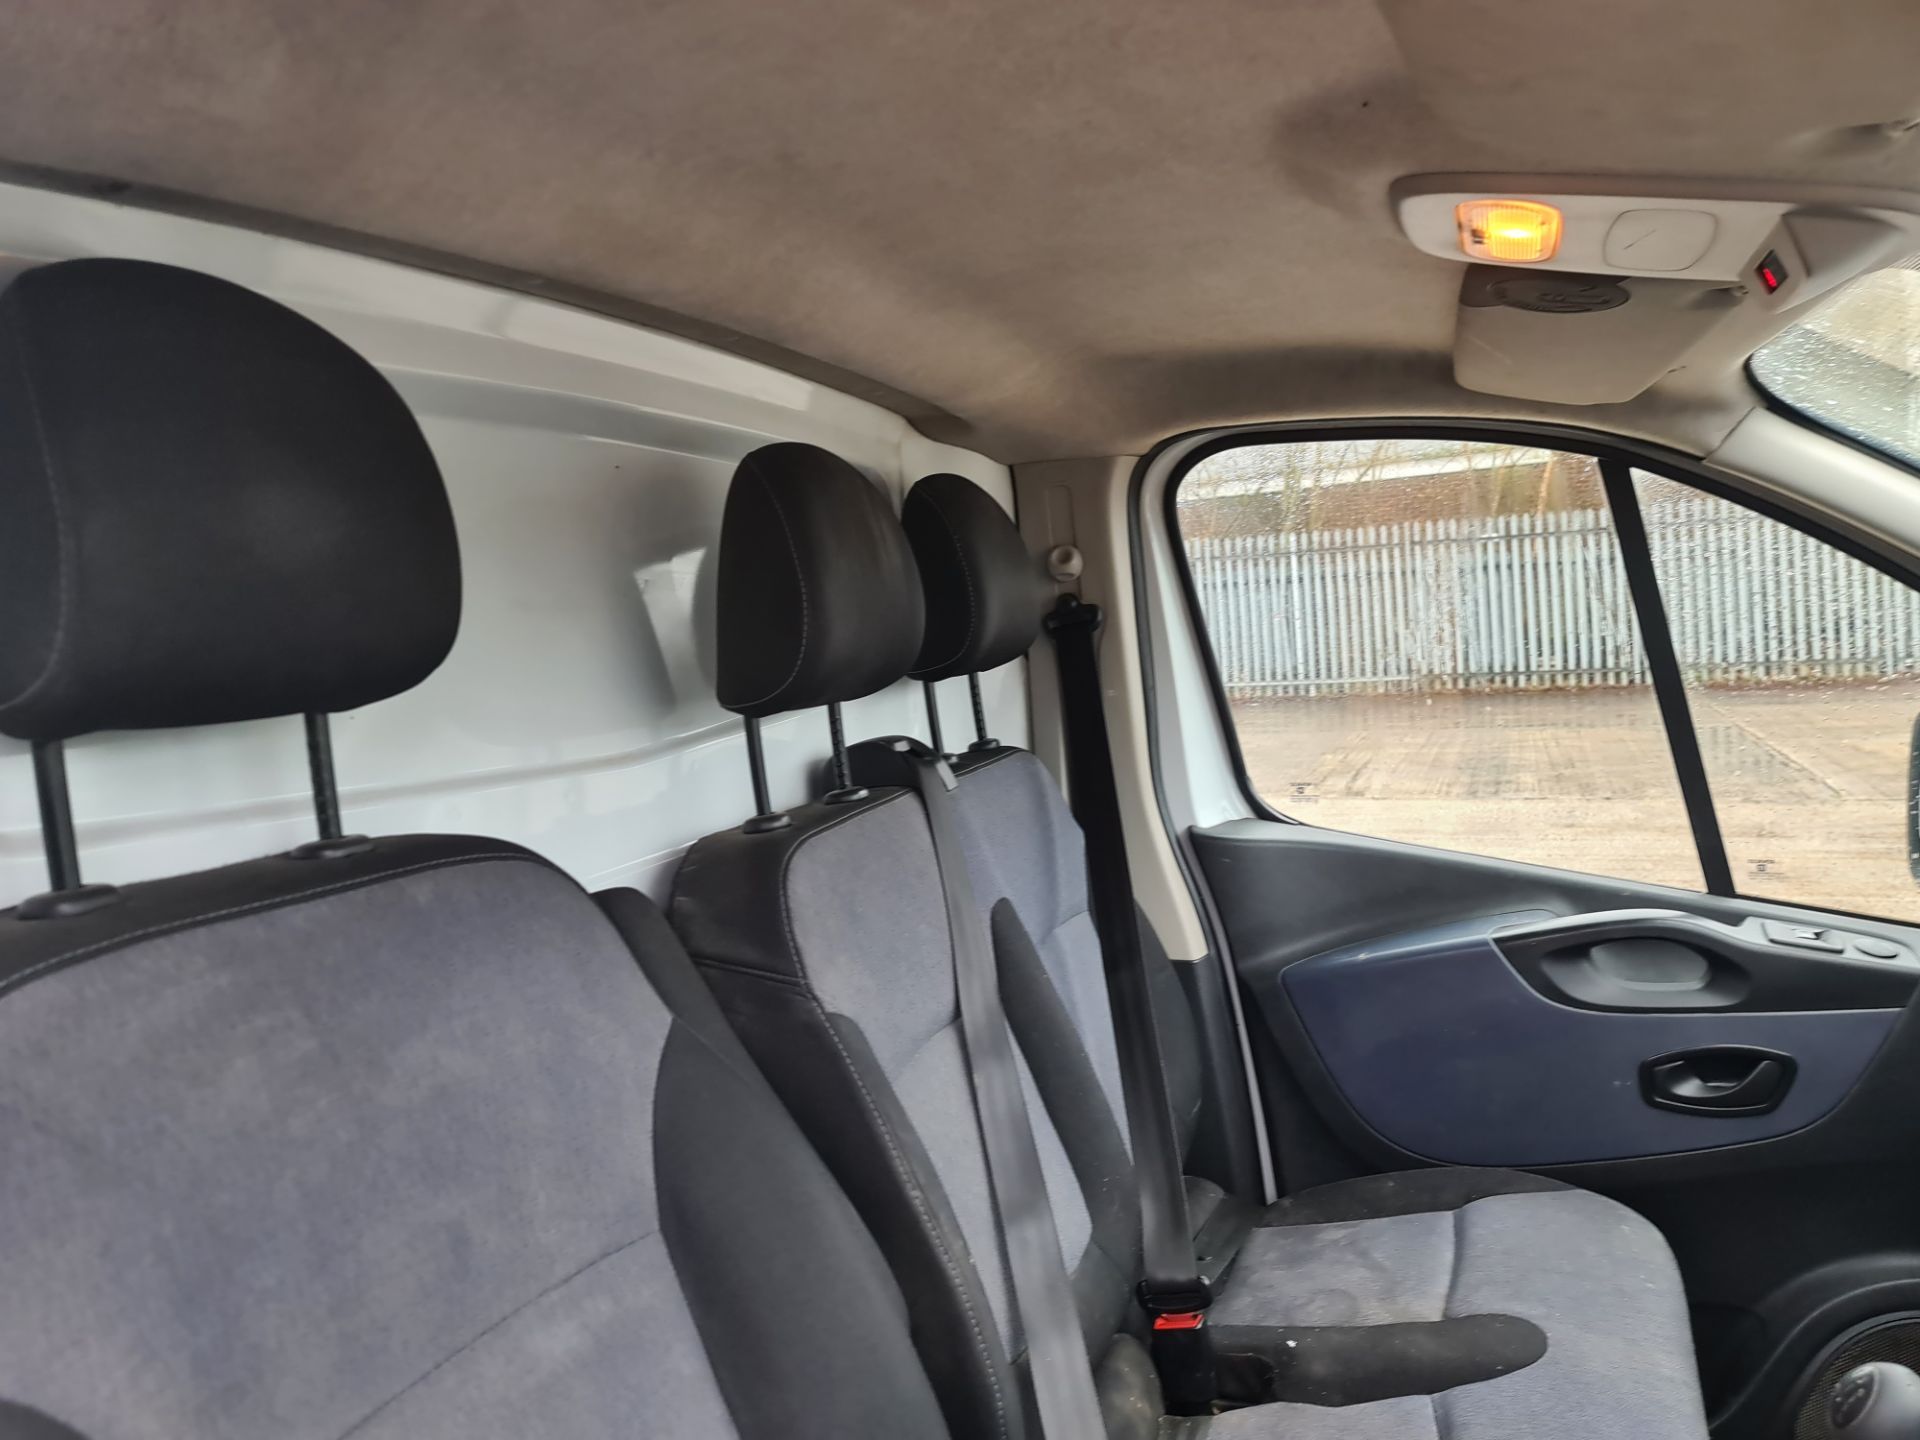 2015 Vauxhall Vivaro 2900 CDTi panel van - Image 21 of 66